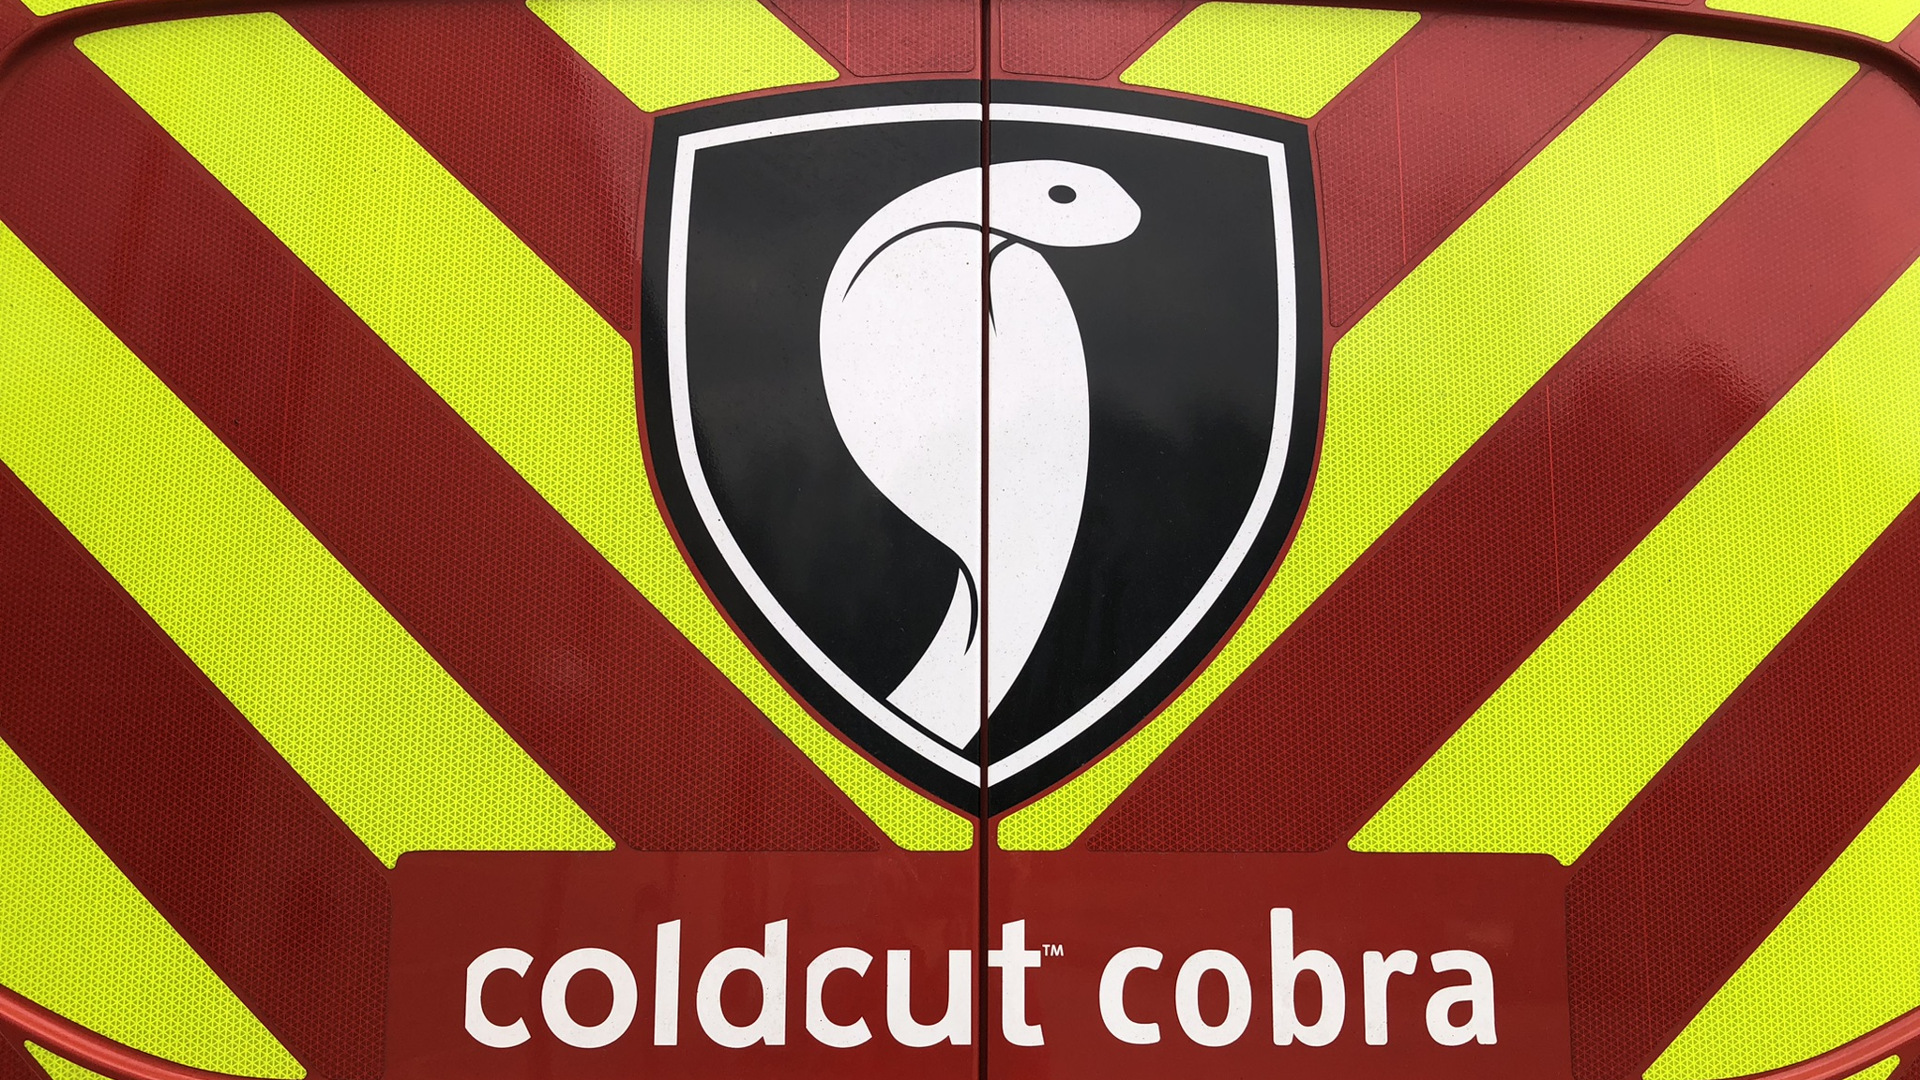 coldcut cobra shield logo